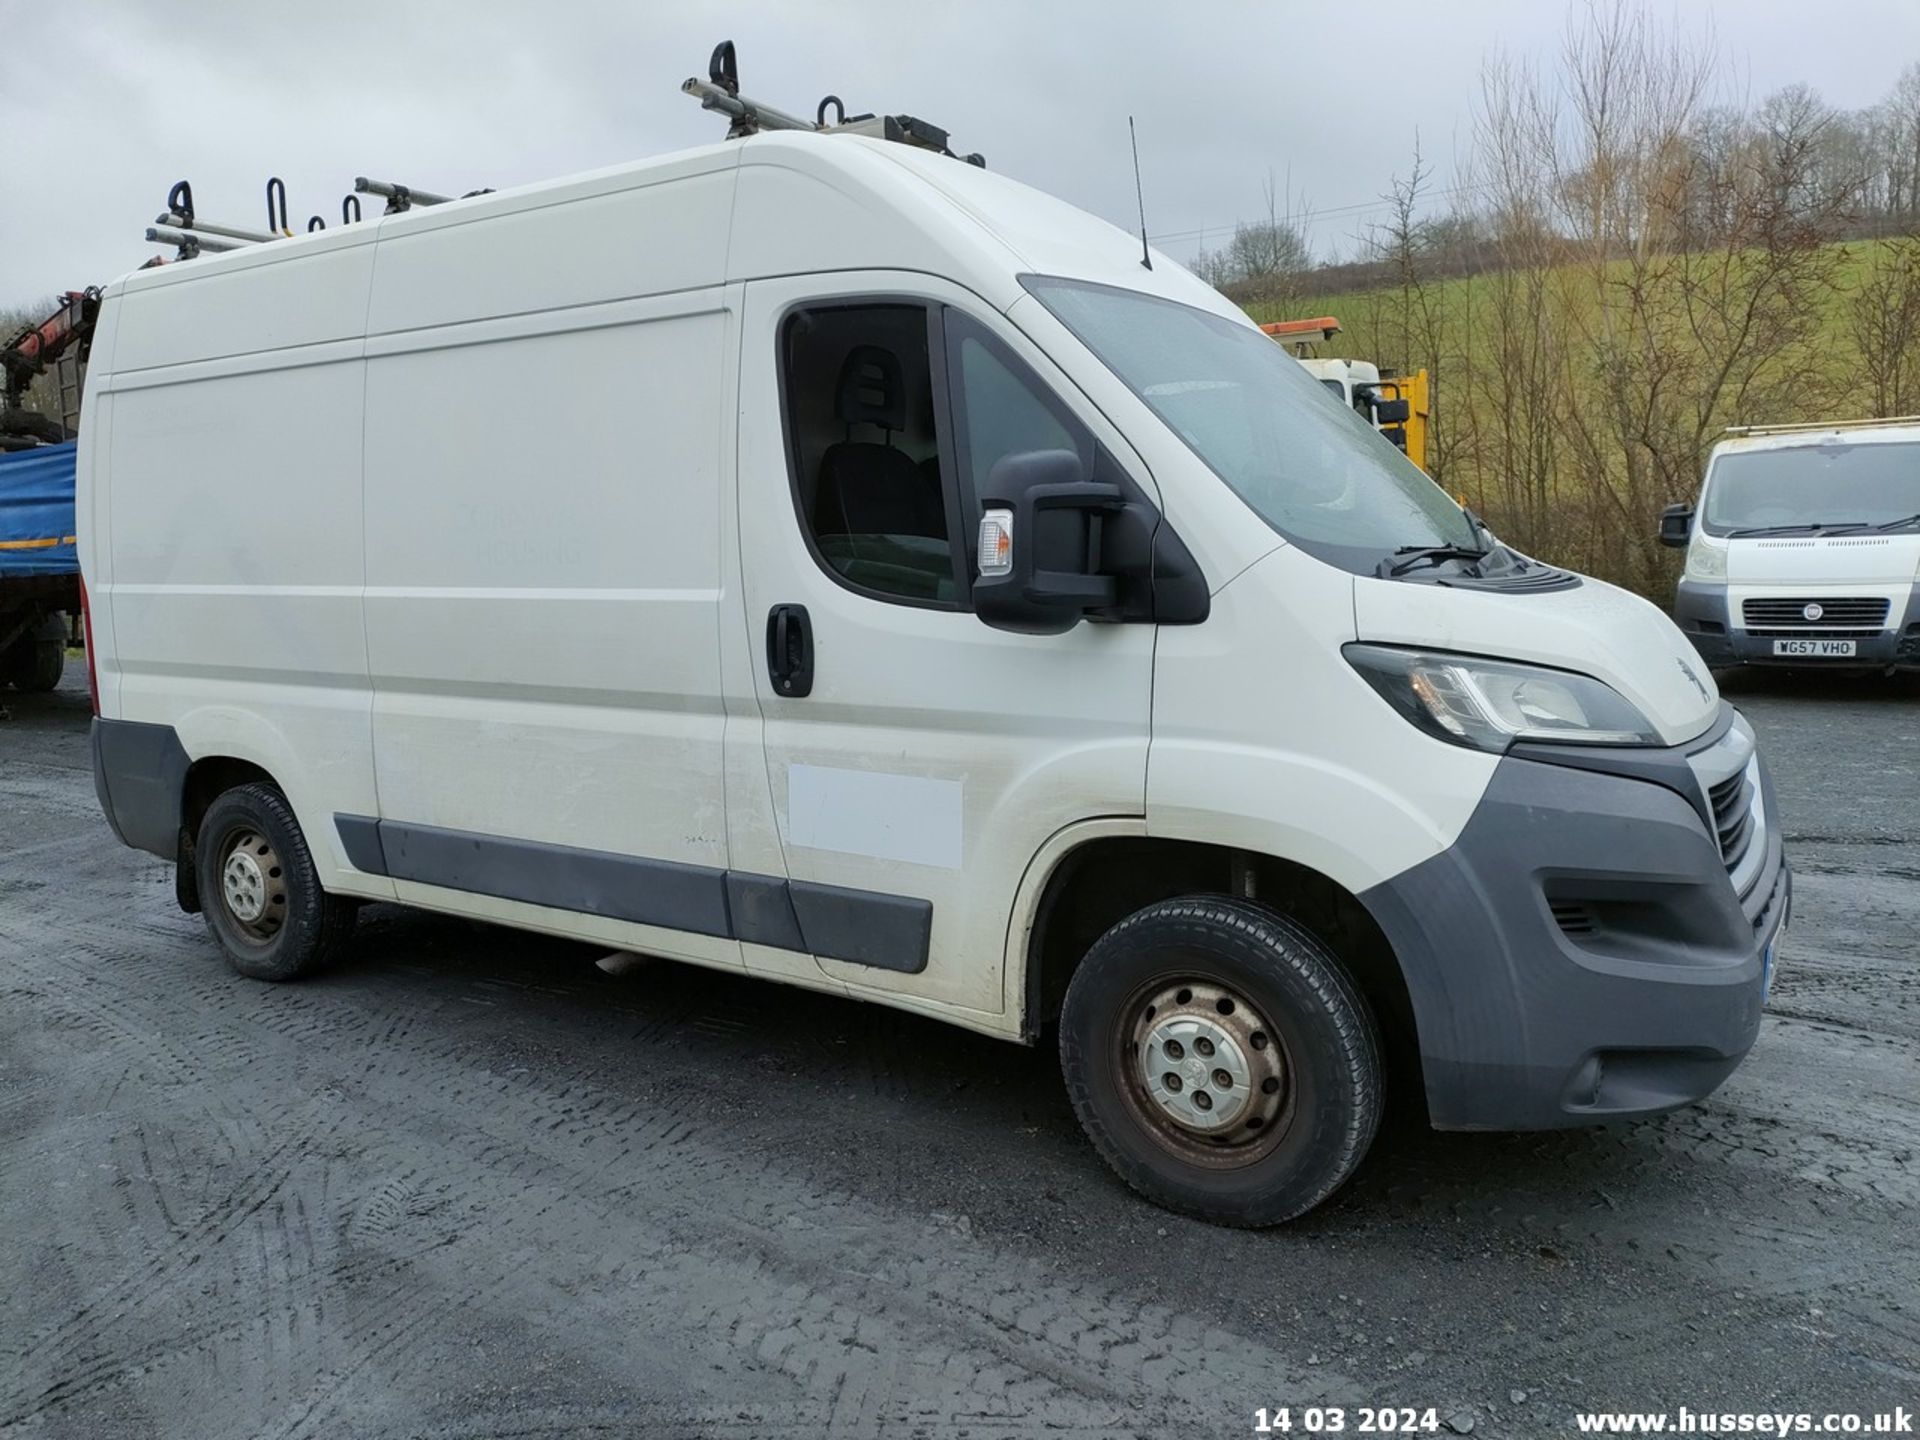 16/16 PEUGEOT BOXER 335 L2H2 HDI - 2198cc 5dr Van (White, 131k) - Image 3 of 62